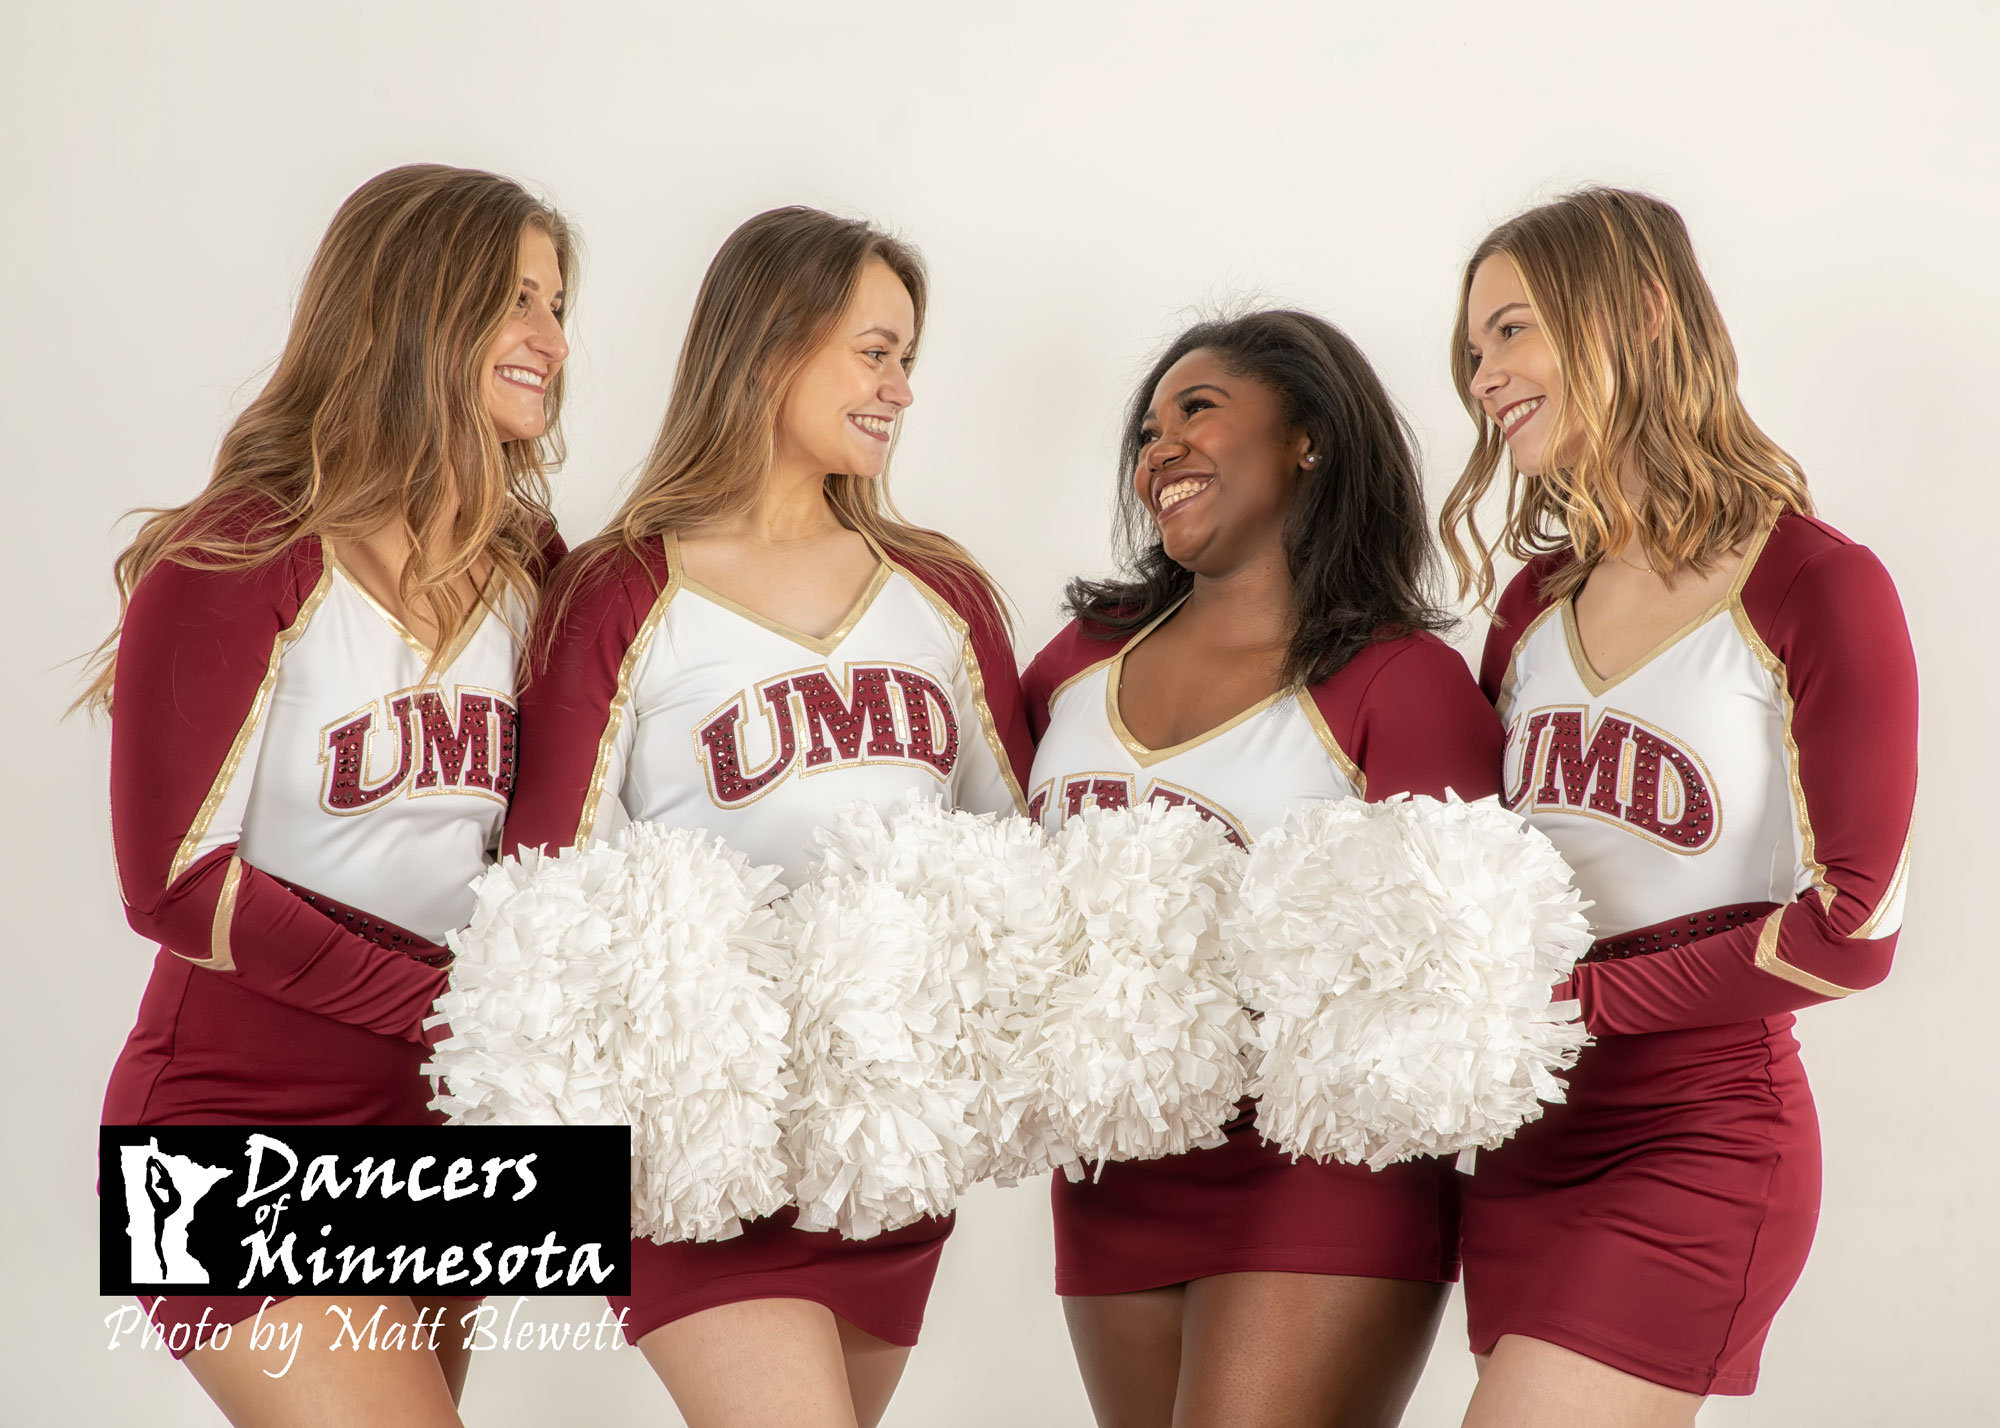 Meet the University of Minnesota Duluth Dance Team